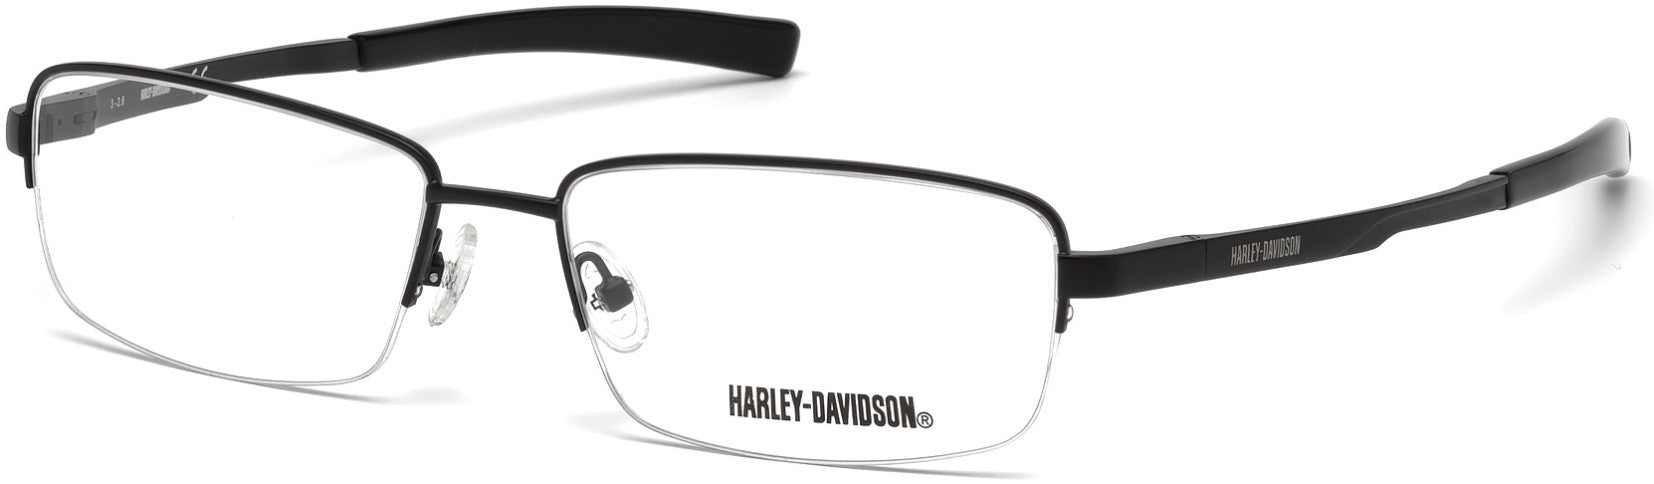 Harley-Davidson HD0755 Geometric Eyeglasses 002-002 - Matte Black